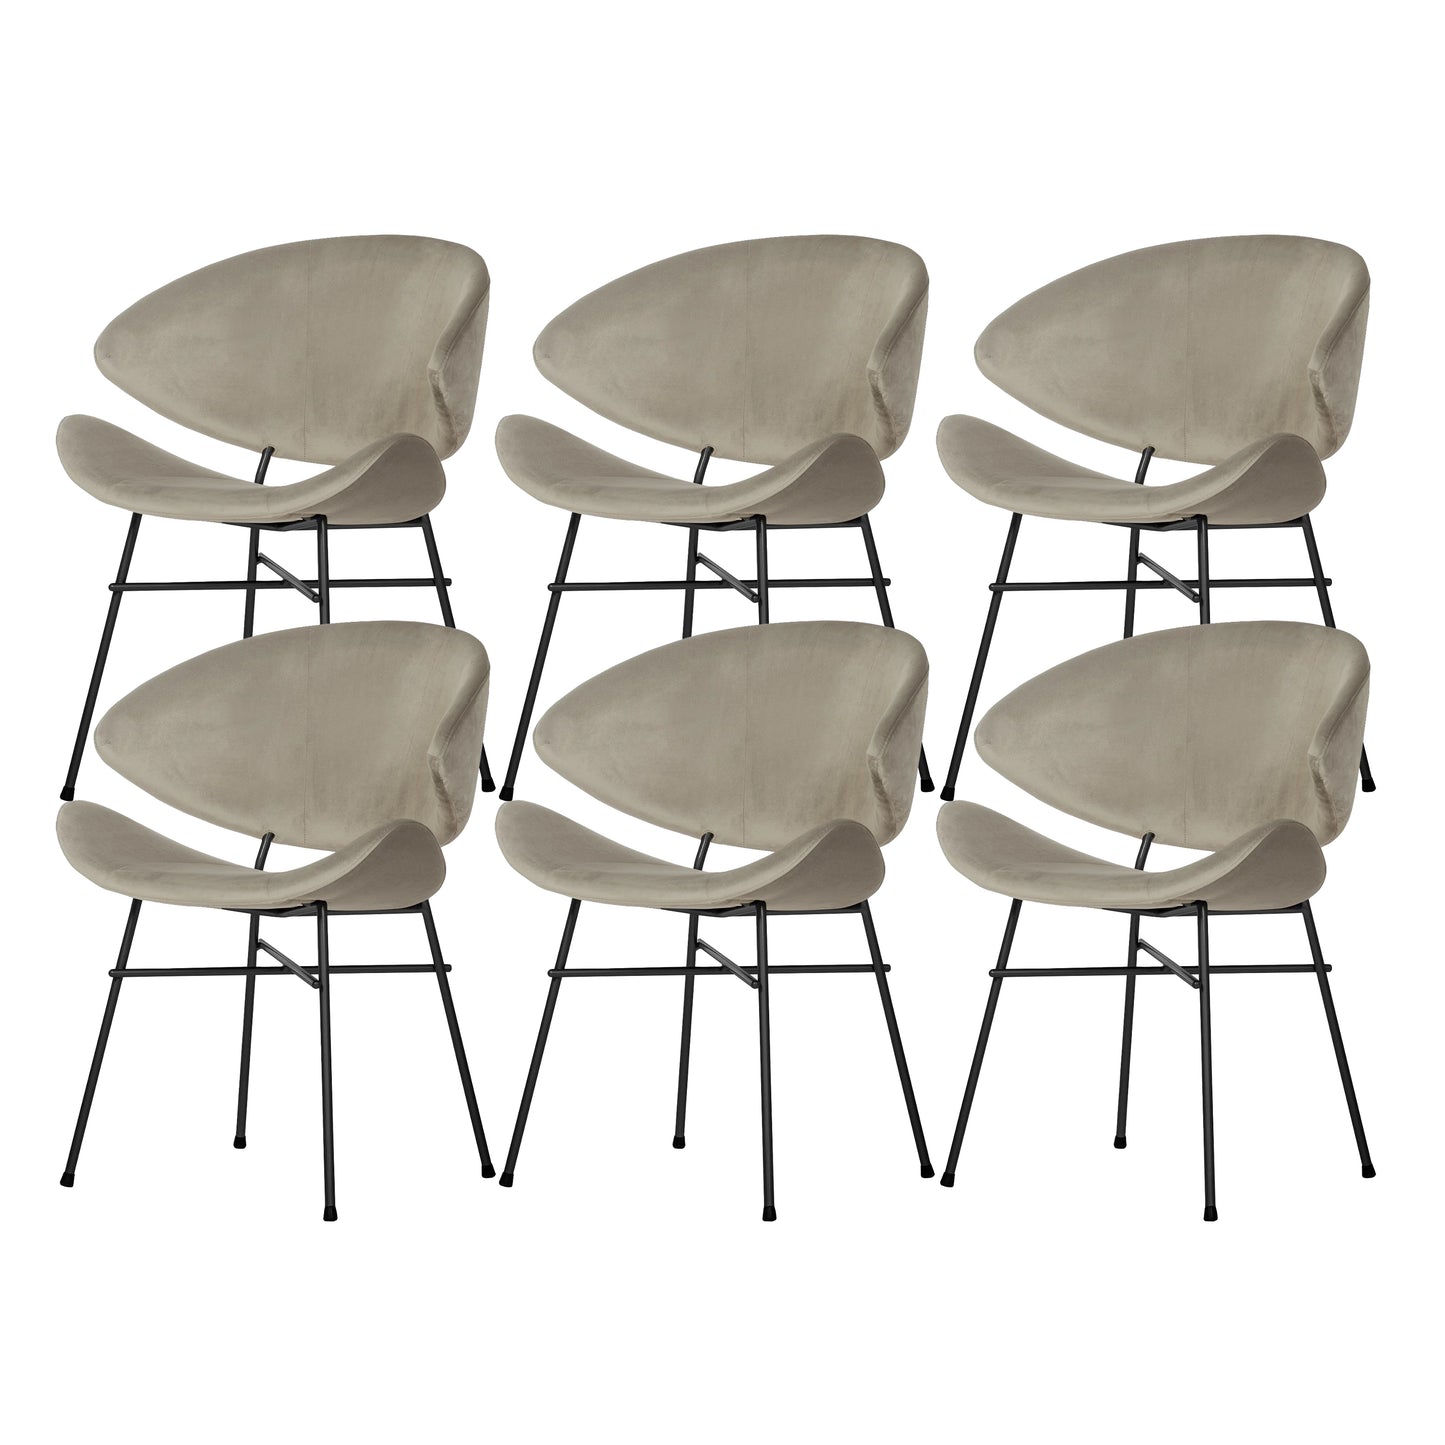 Cheri Velours Standard - 6 Chairs Pack